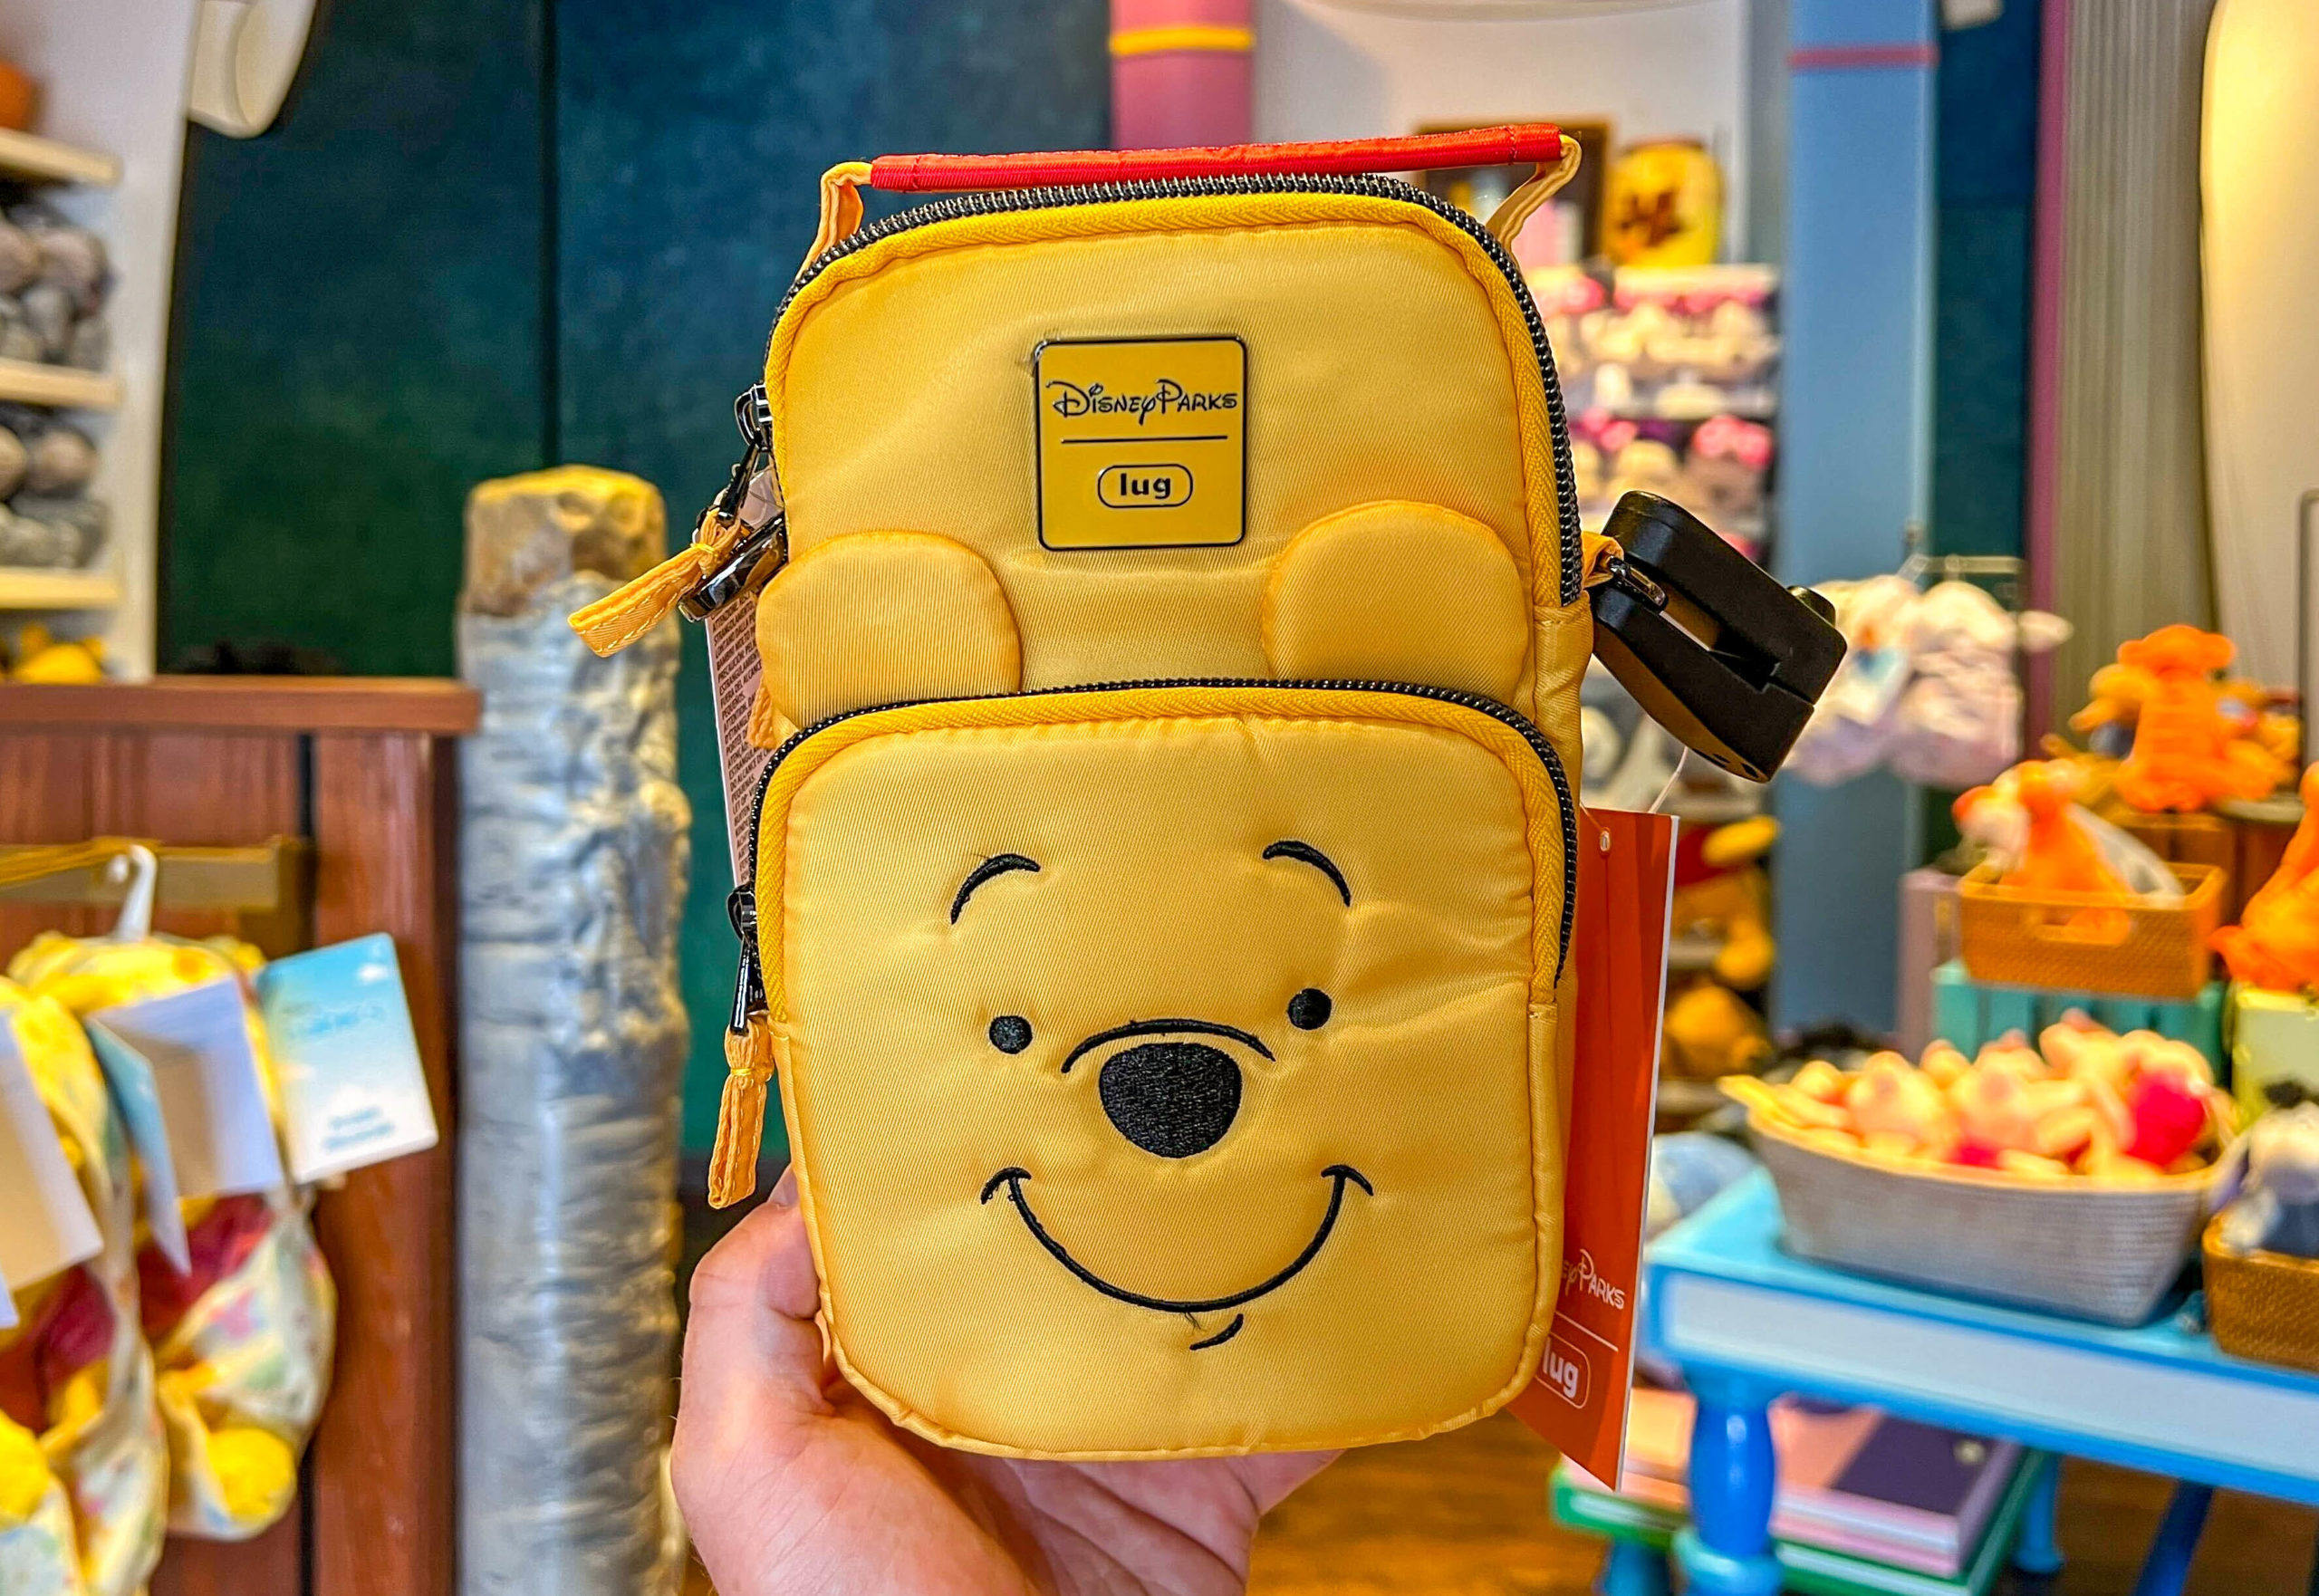 Winnie the Pooh Lug Bag